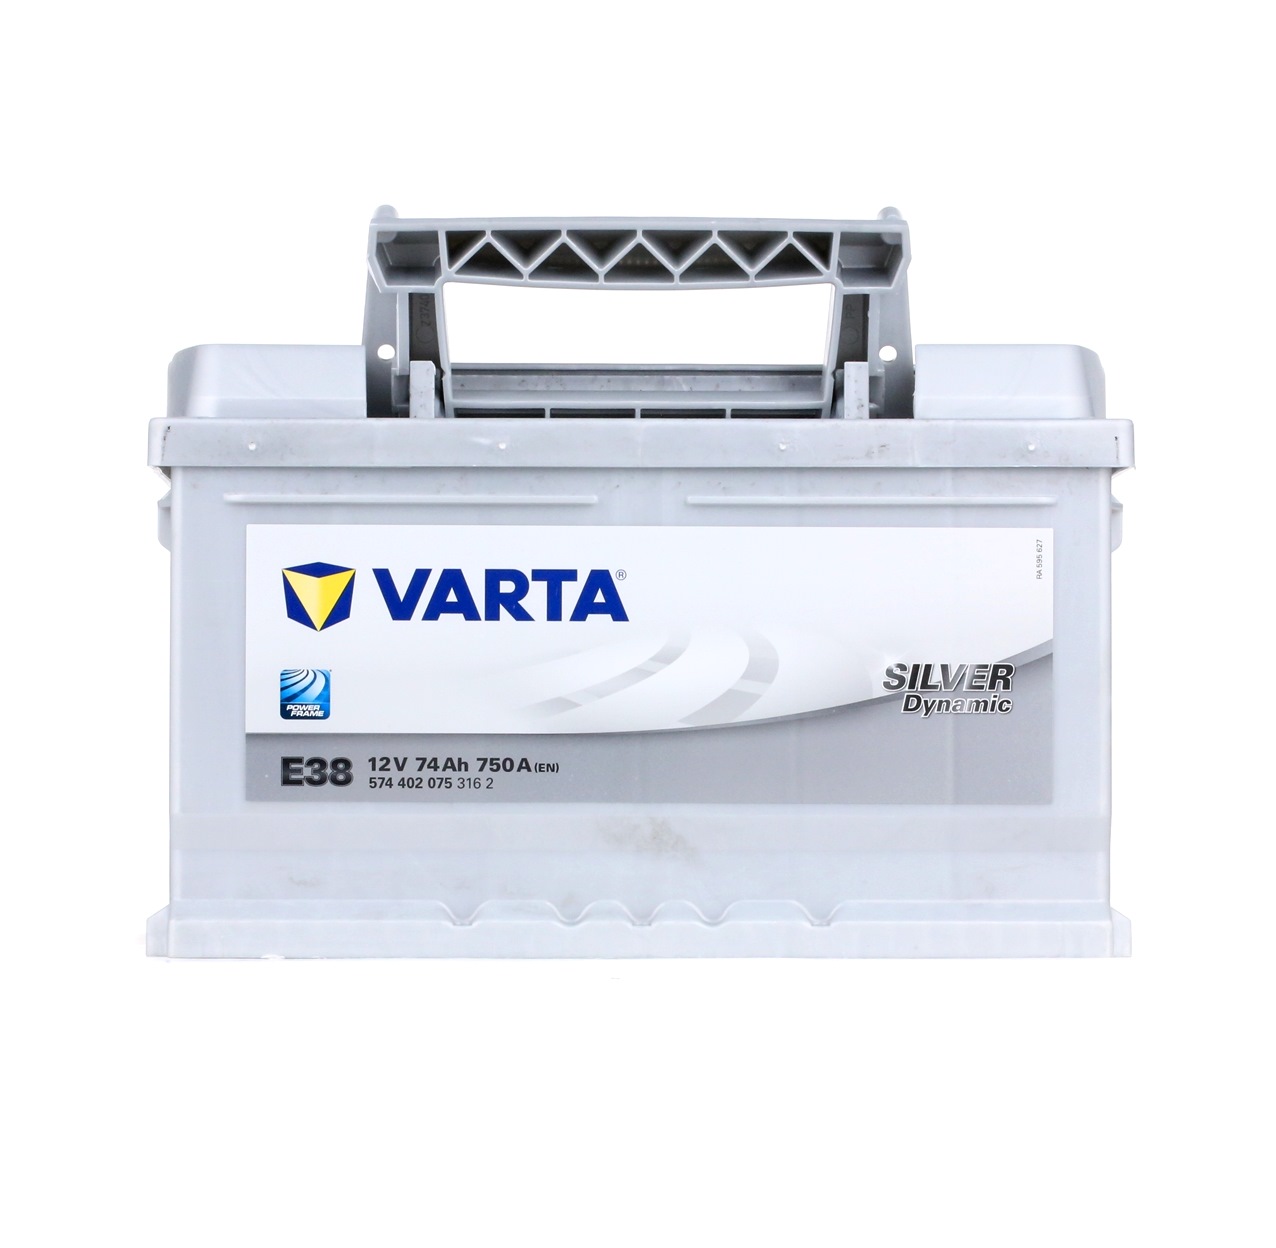 VARTA SILVER dynamic, E38 5744020753162 Batterie 12V 74Ah 750A B13 Bleiakkumulator